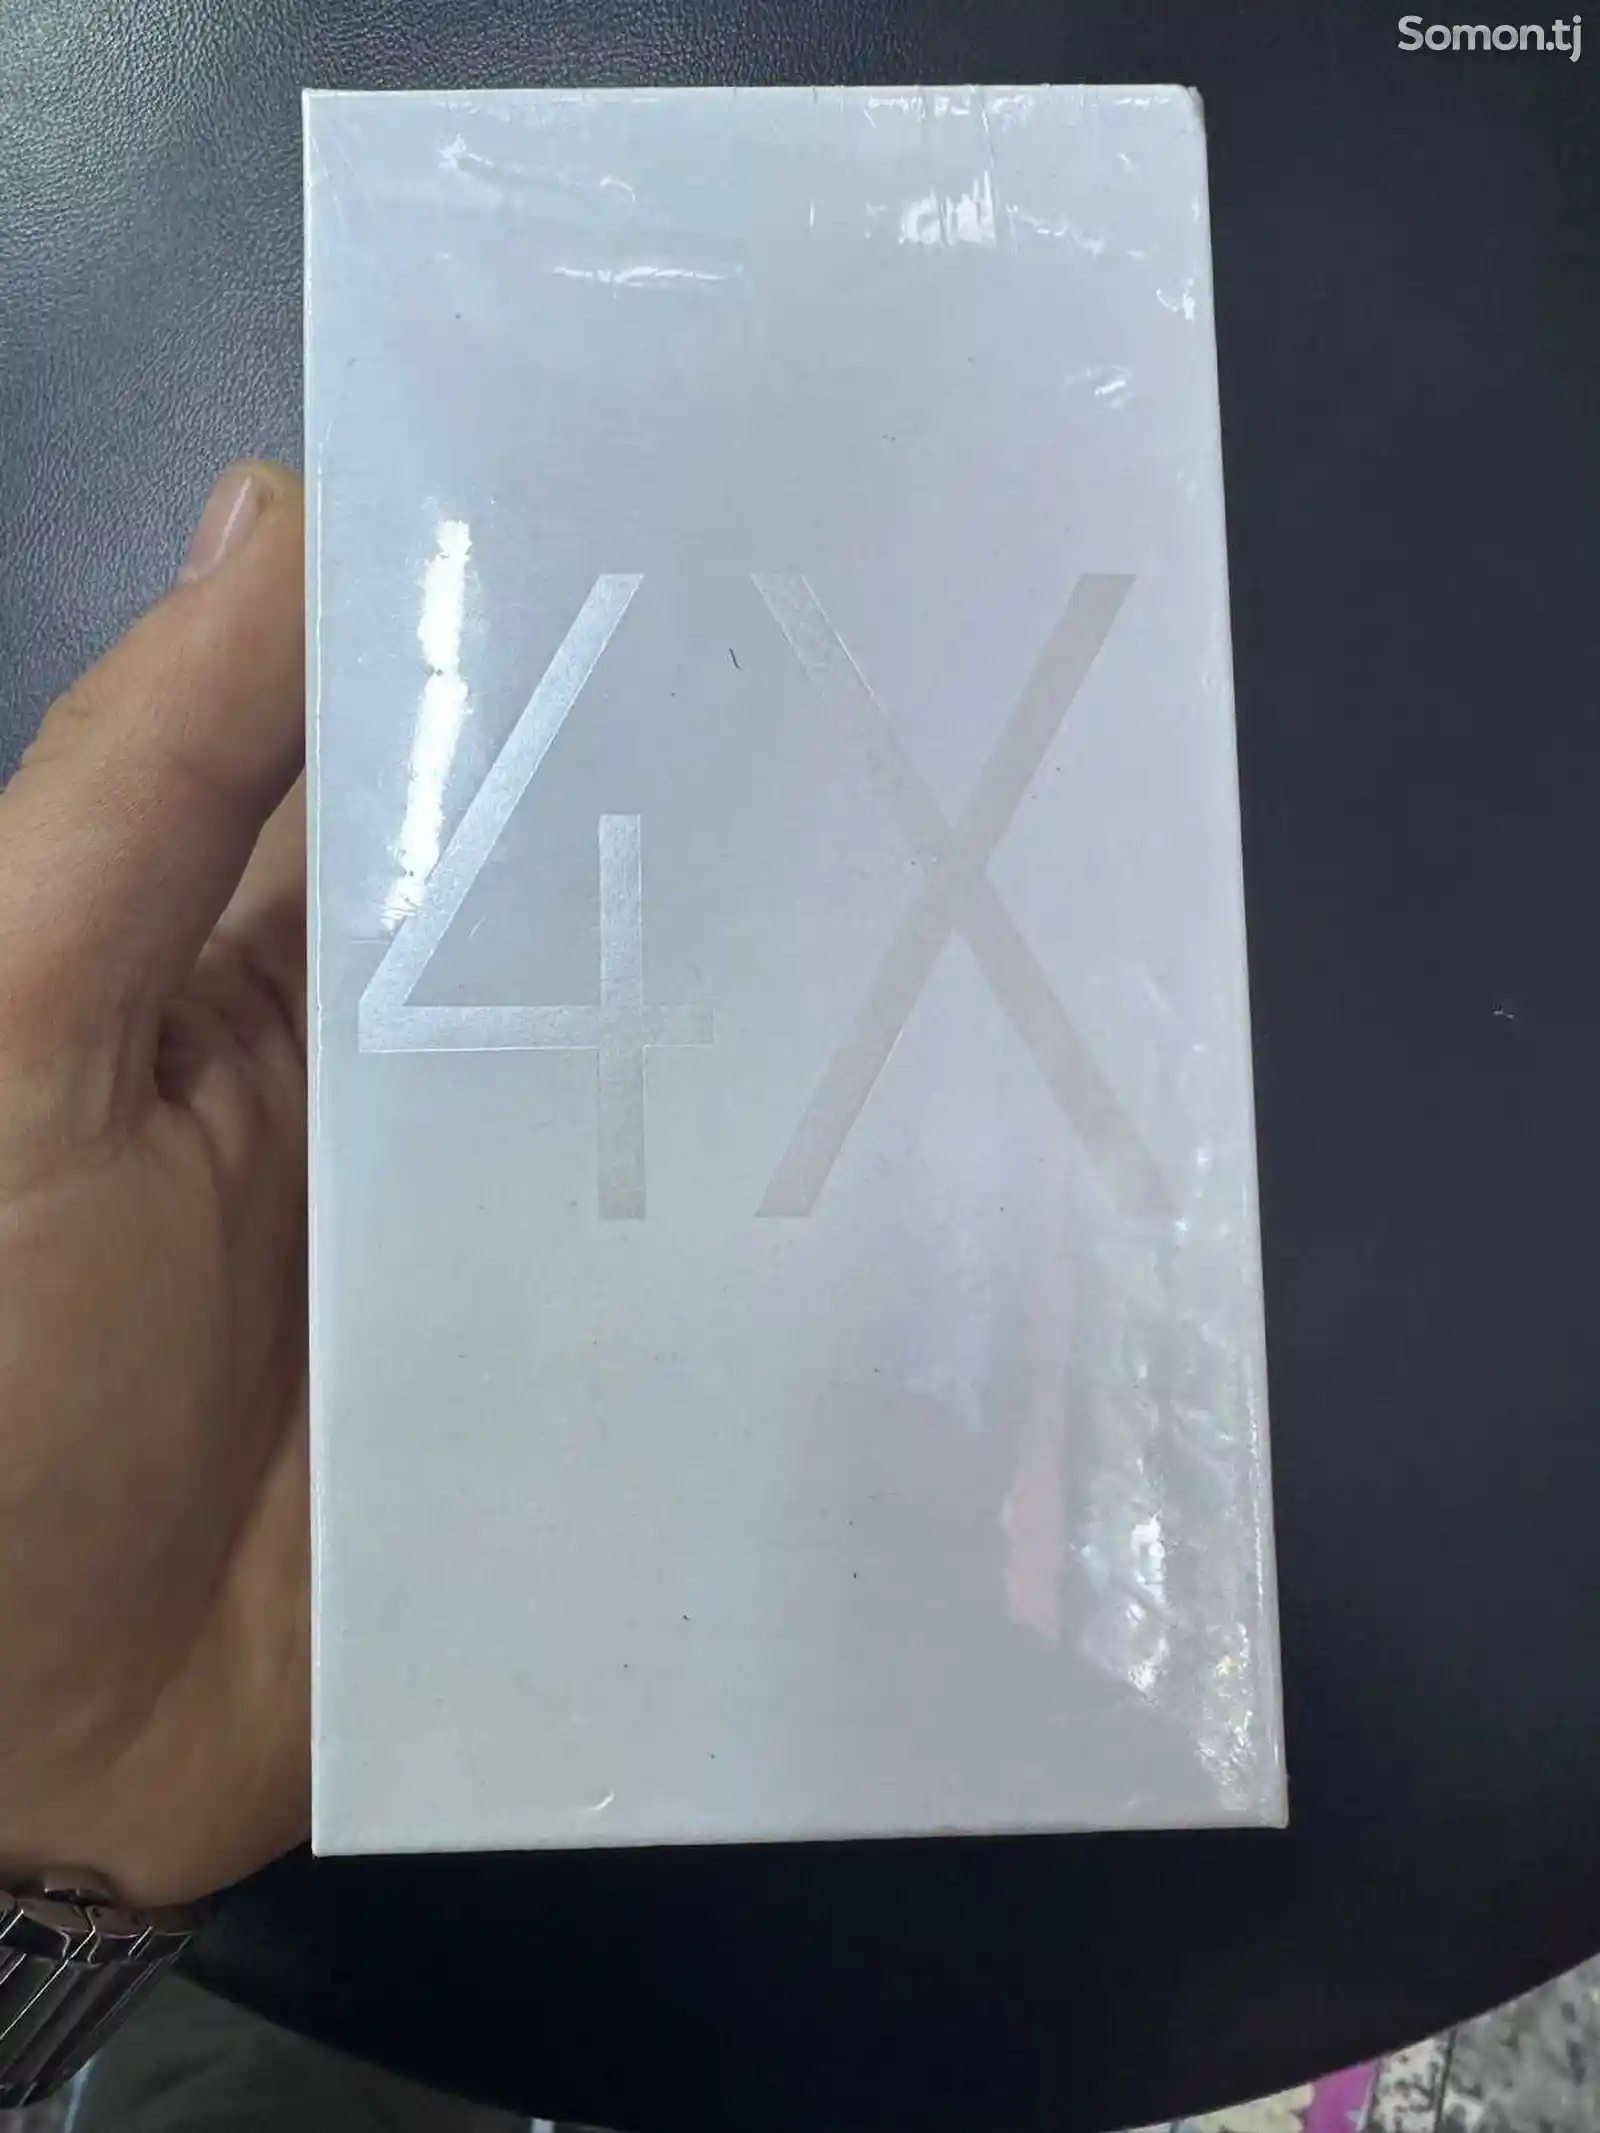 Xiaomi Redmi 4X 32gb-1